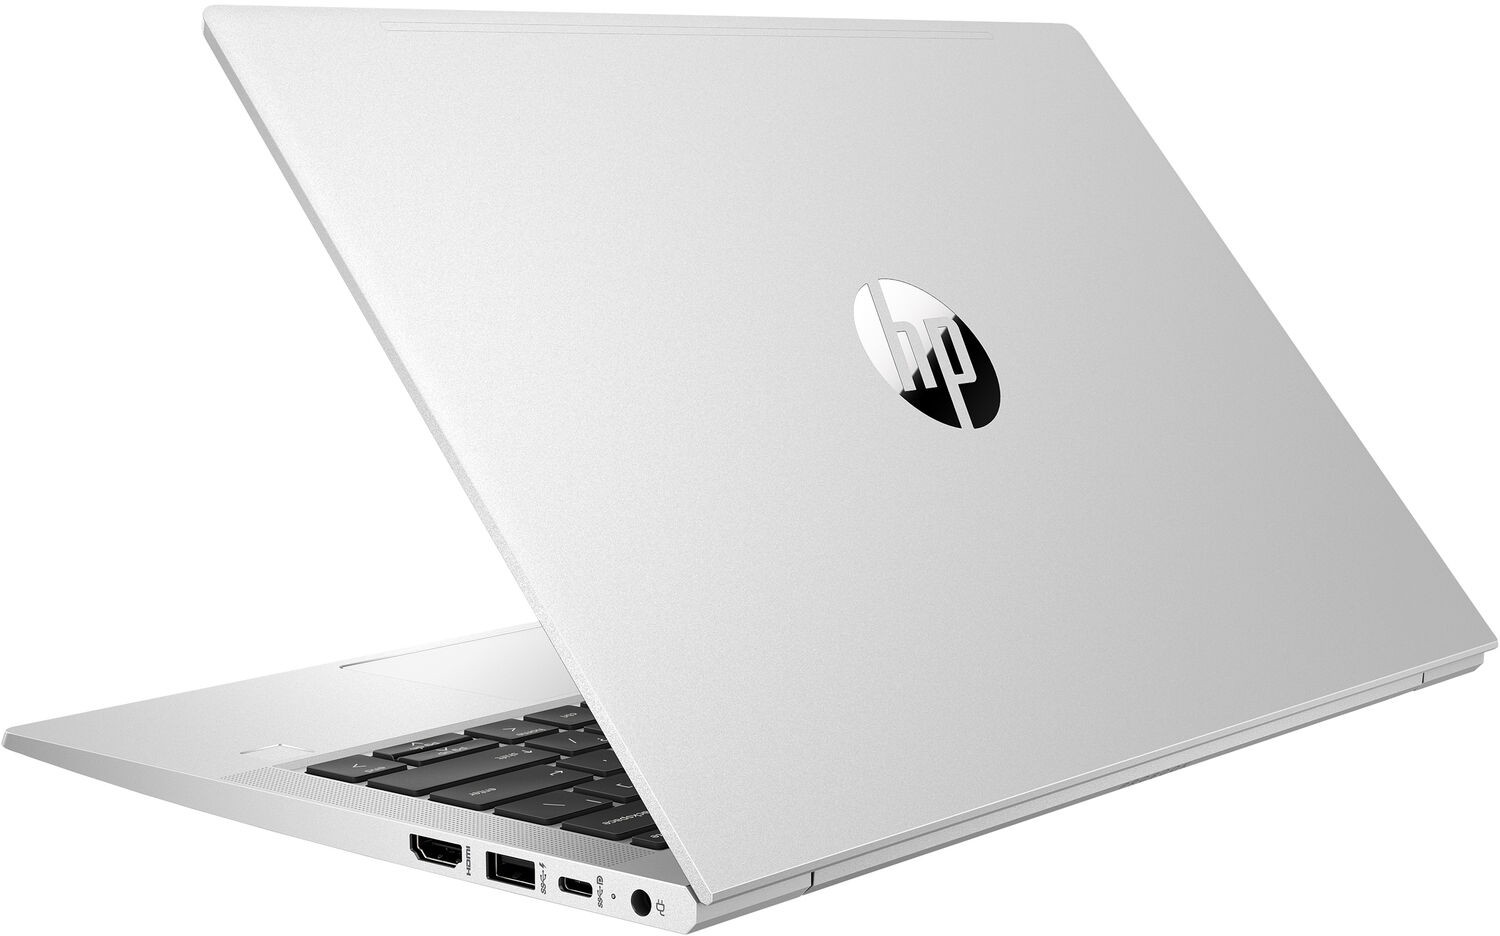 Ноутбук HP ProBook 430 G8 Core i3-1115G4 3.0GHz, 13.3 FHD (1920x1080) AG 8GB DDR4 (2x4GB),256GB SSD,45Wh LL,FPR,1.5kg,1y,Silver,Win10Pro-39392